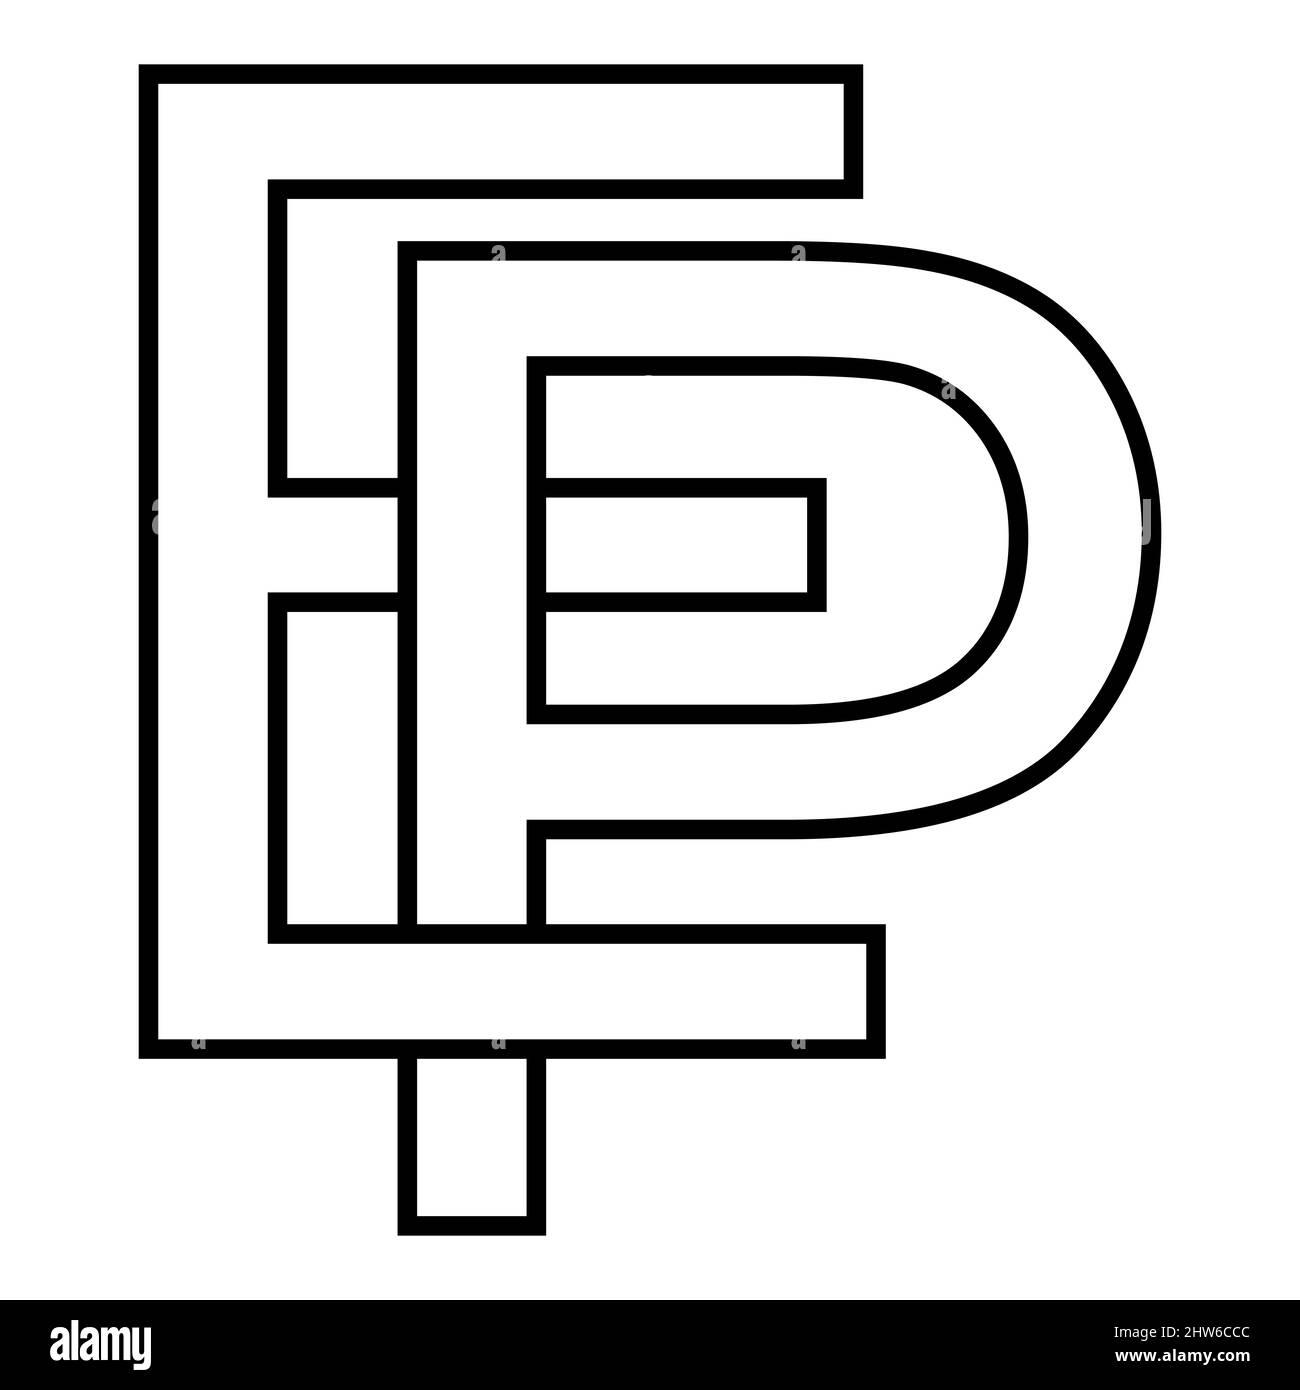 Logo sign ep pe icon, nft ep interlaced letters e p Stock Vector